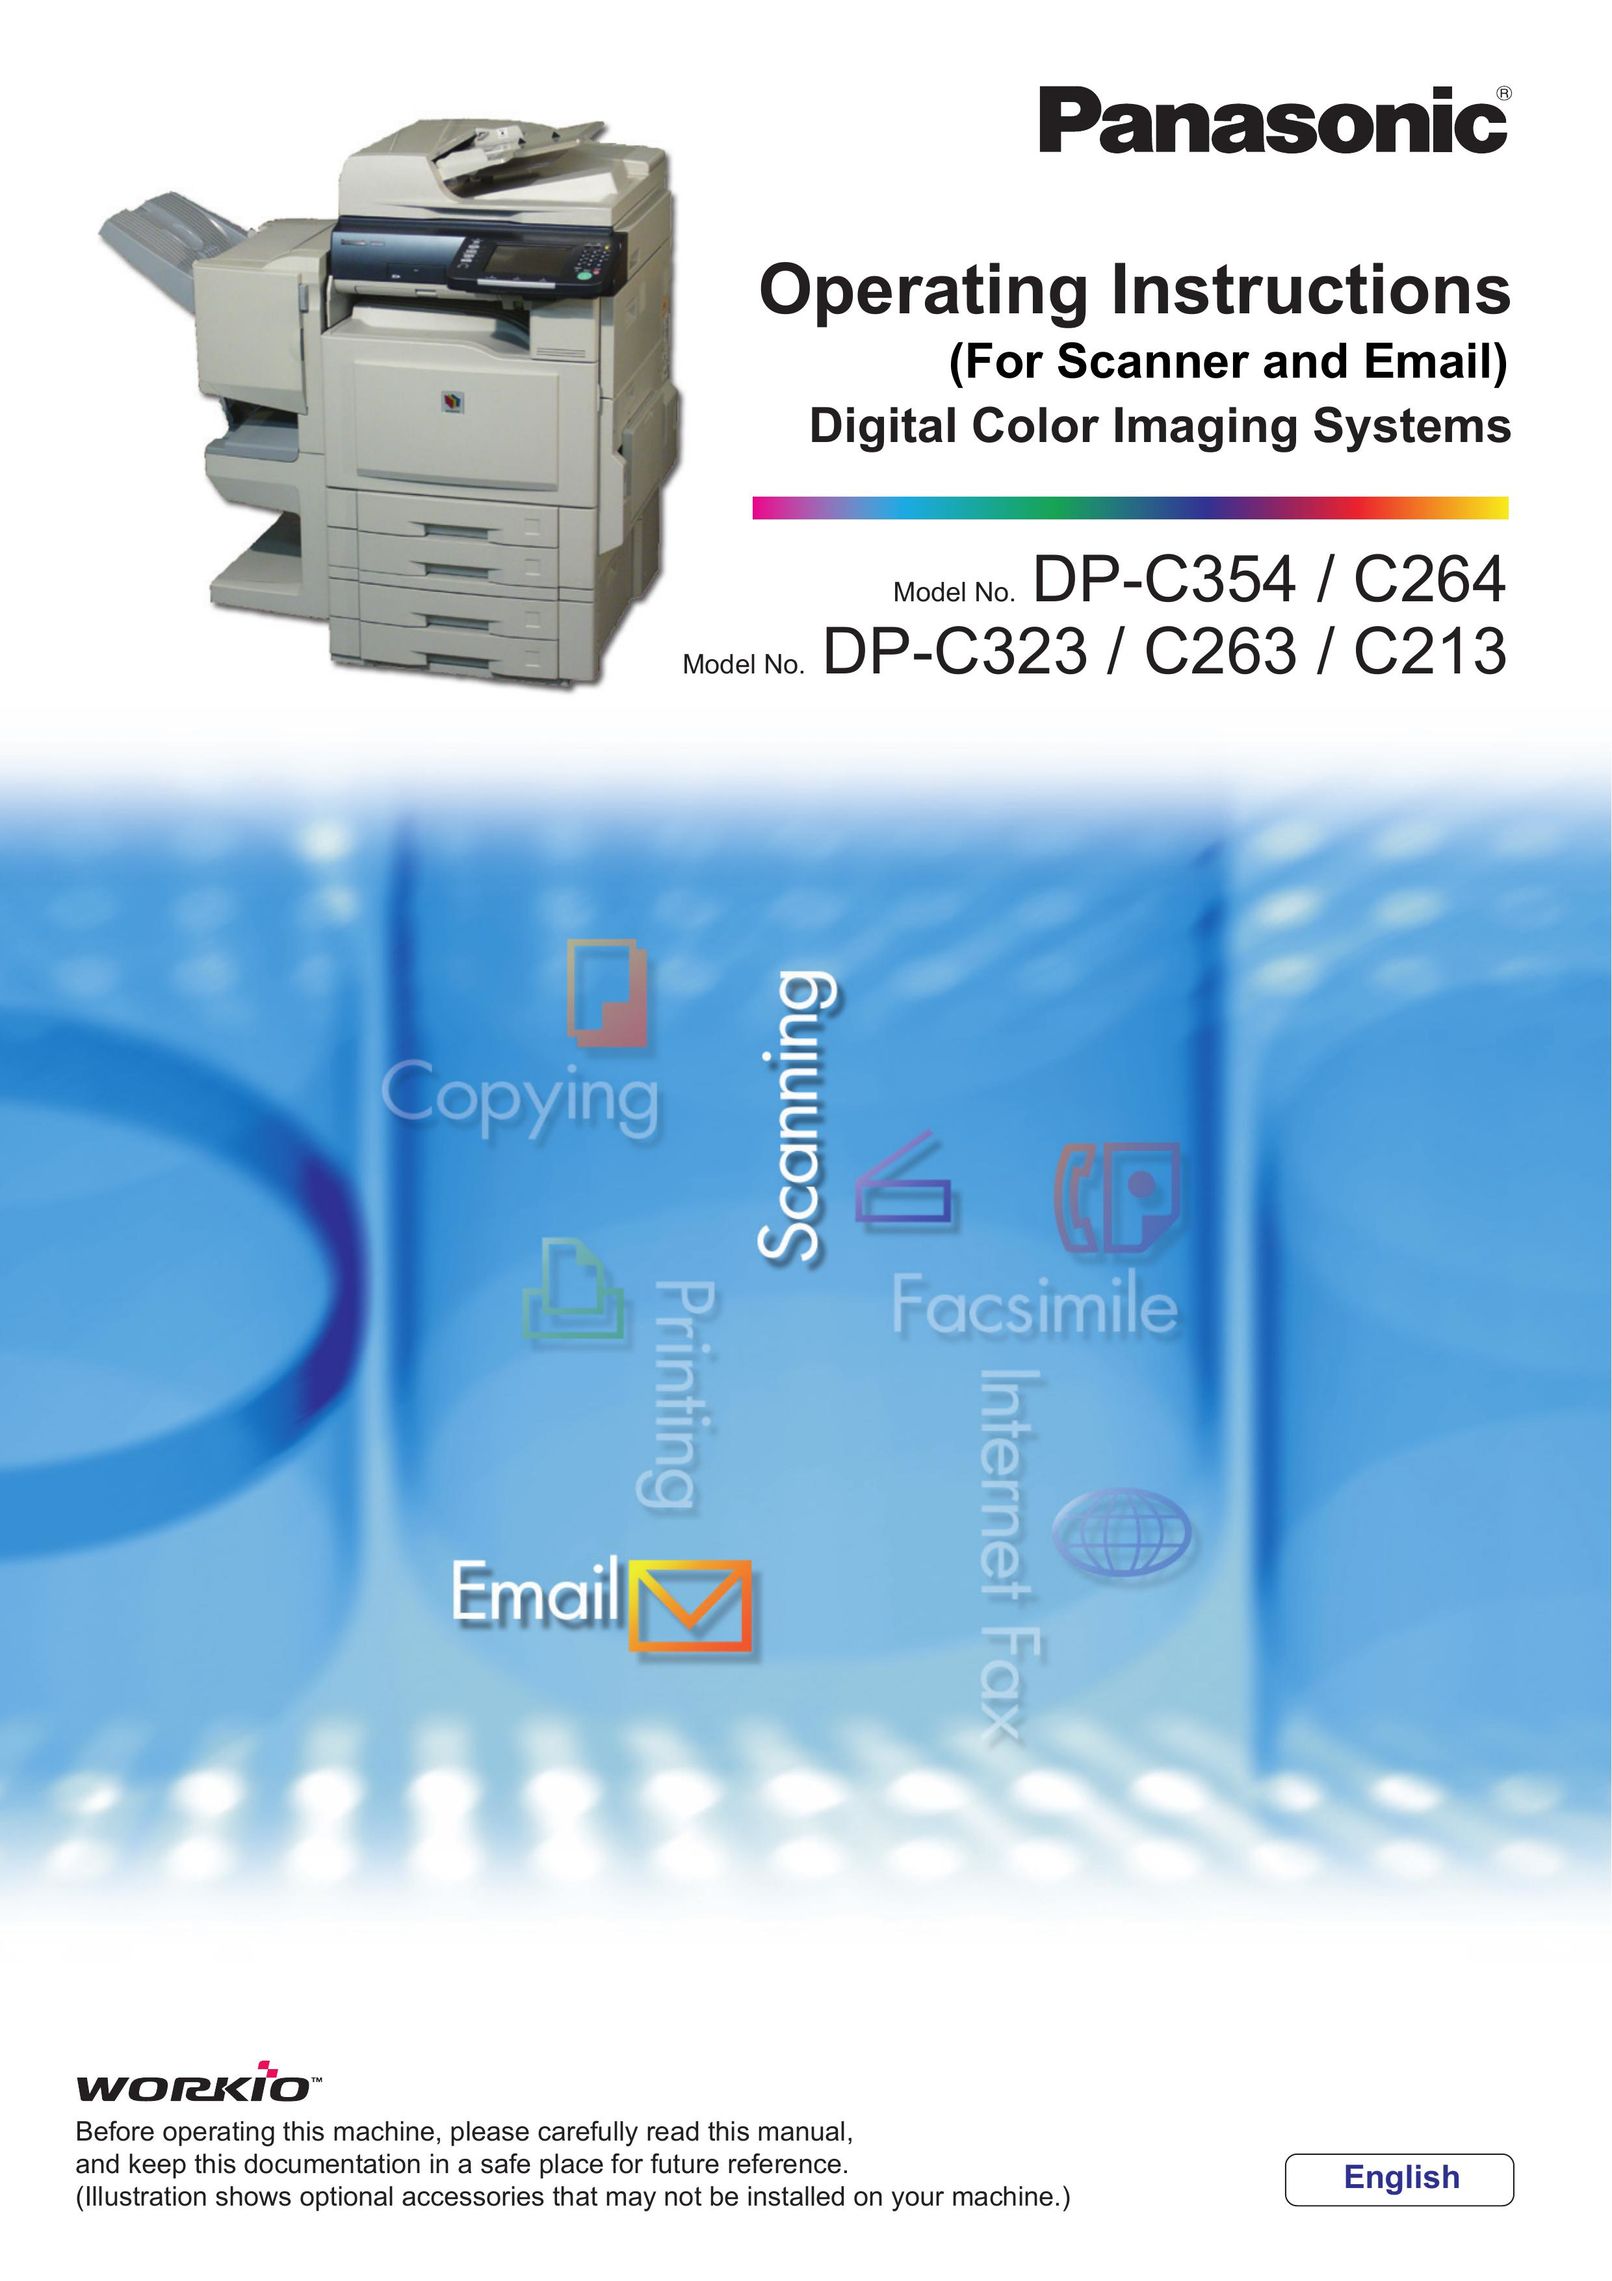 Panasonic C213 Scanner User Manual